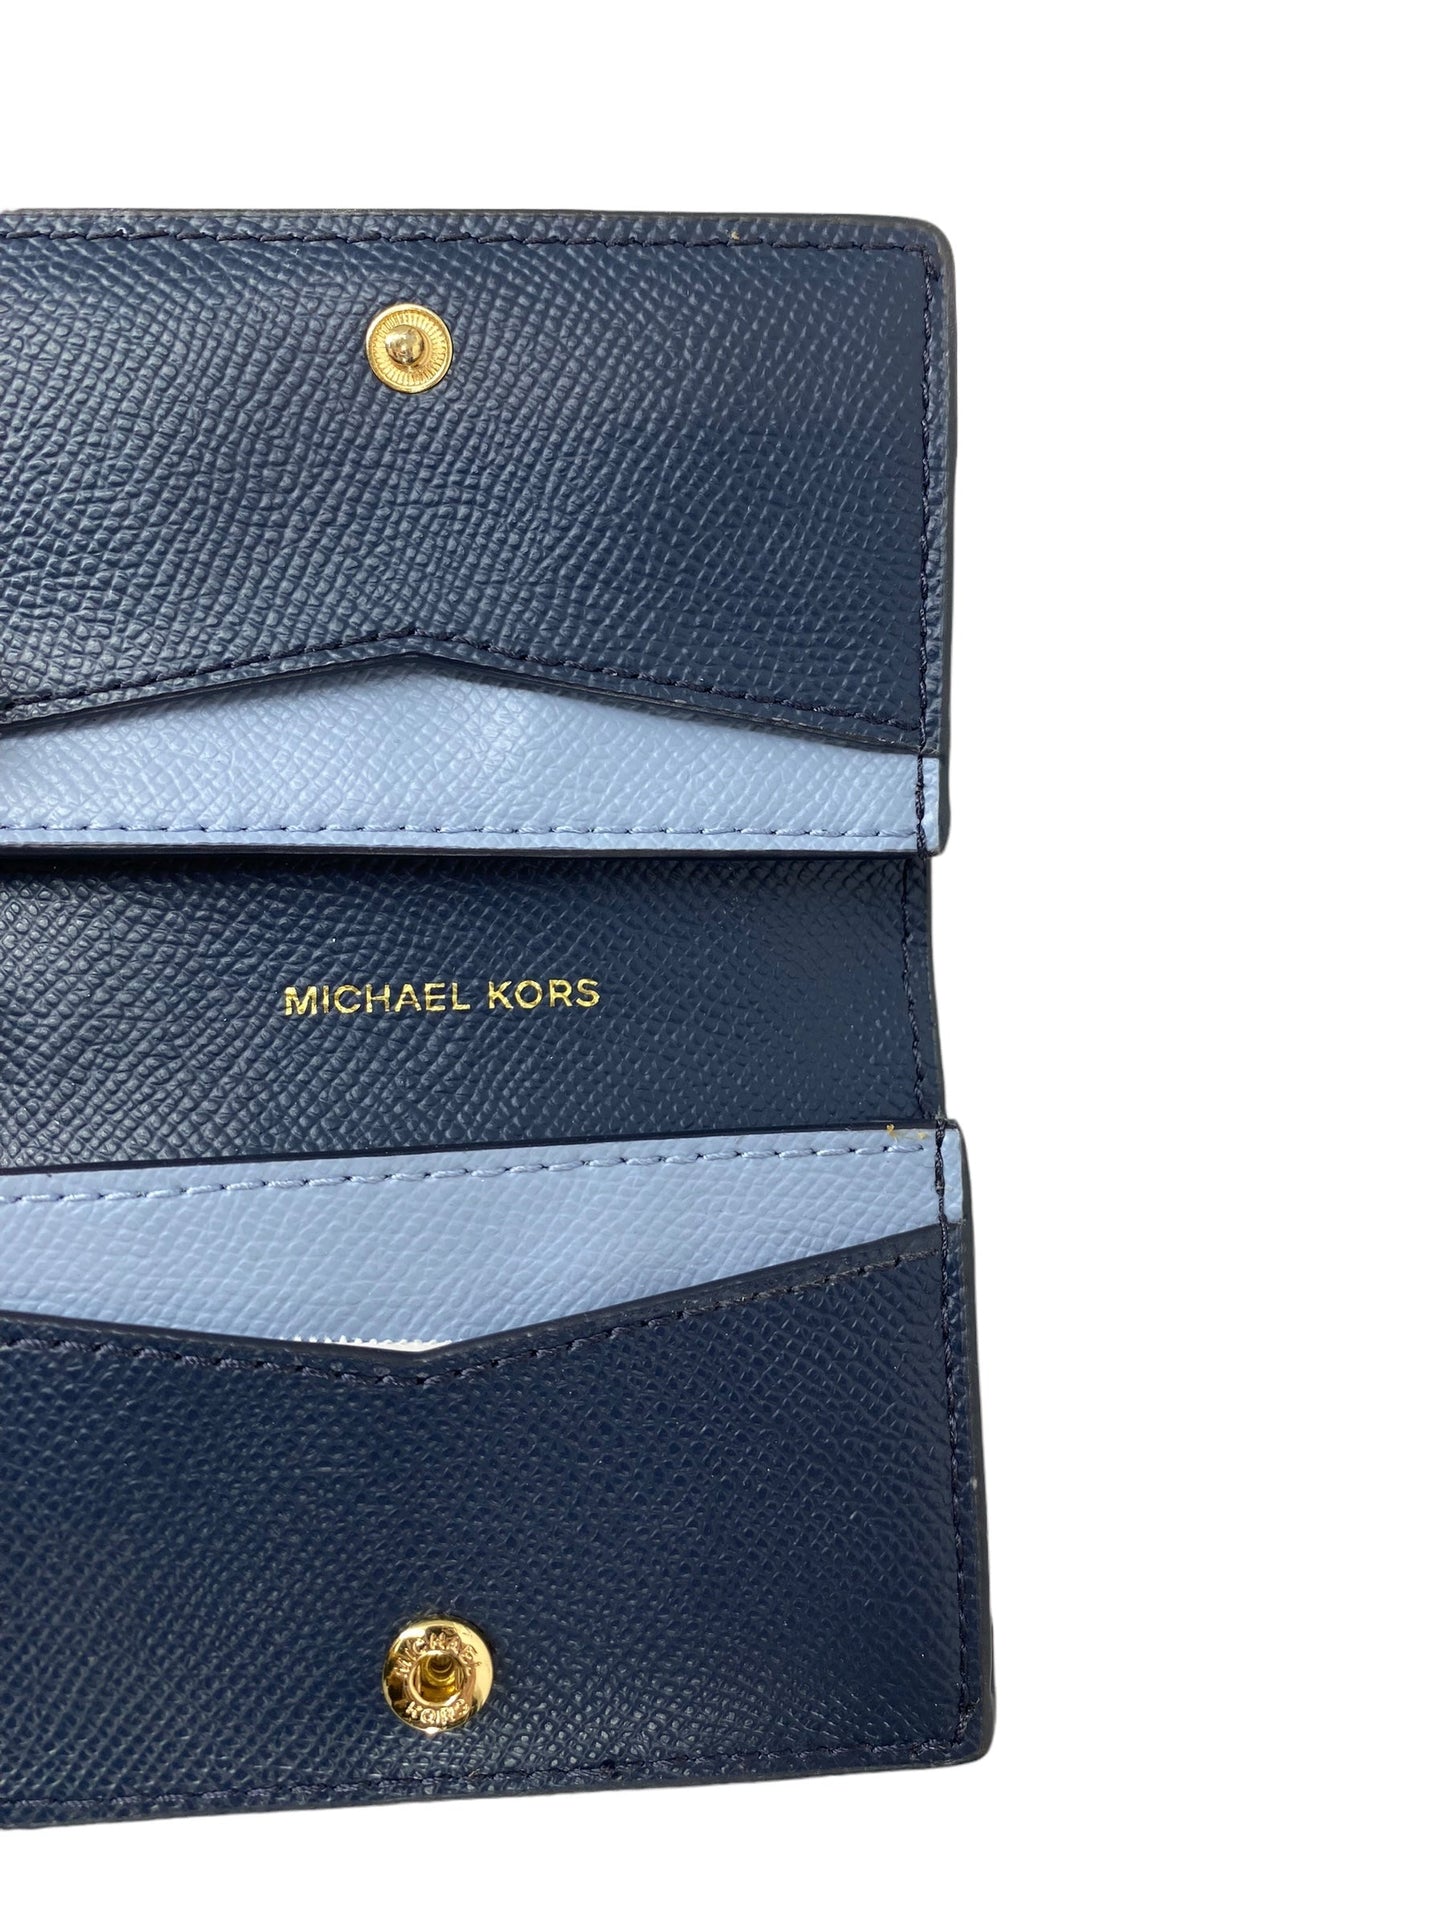 Blue Wallet Michael Kors, Size Small